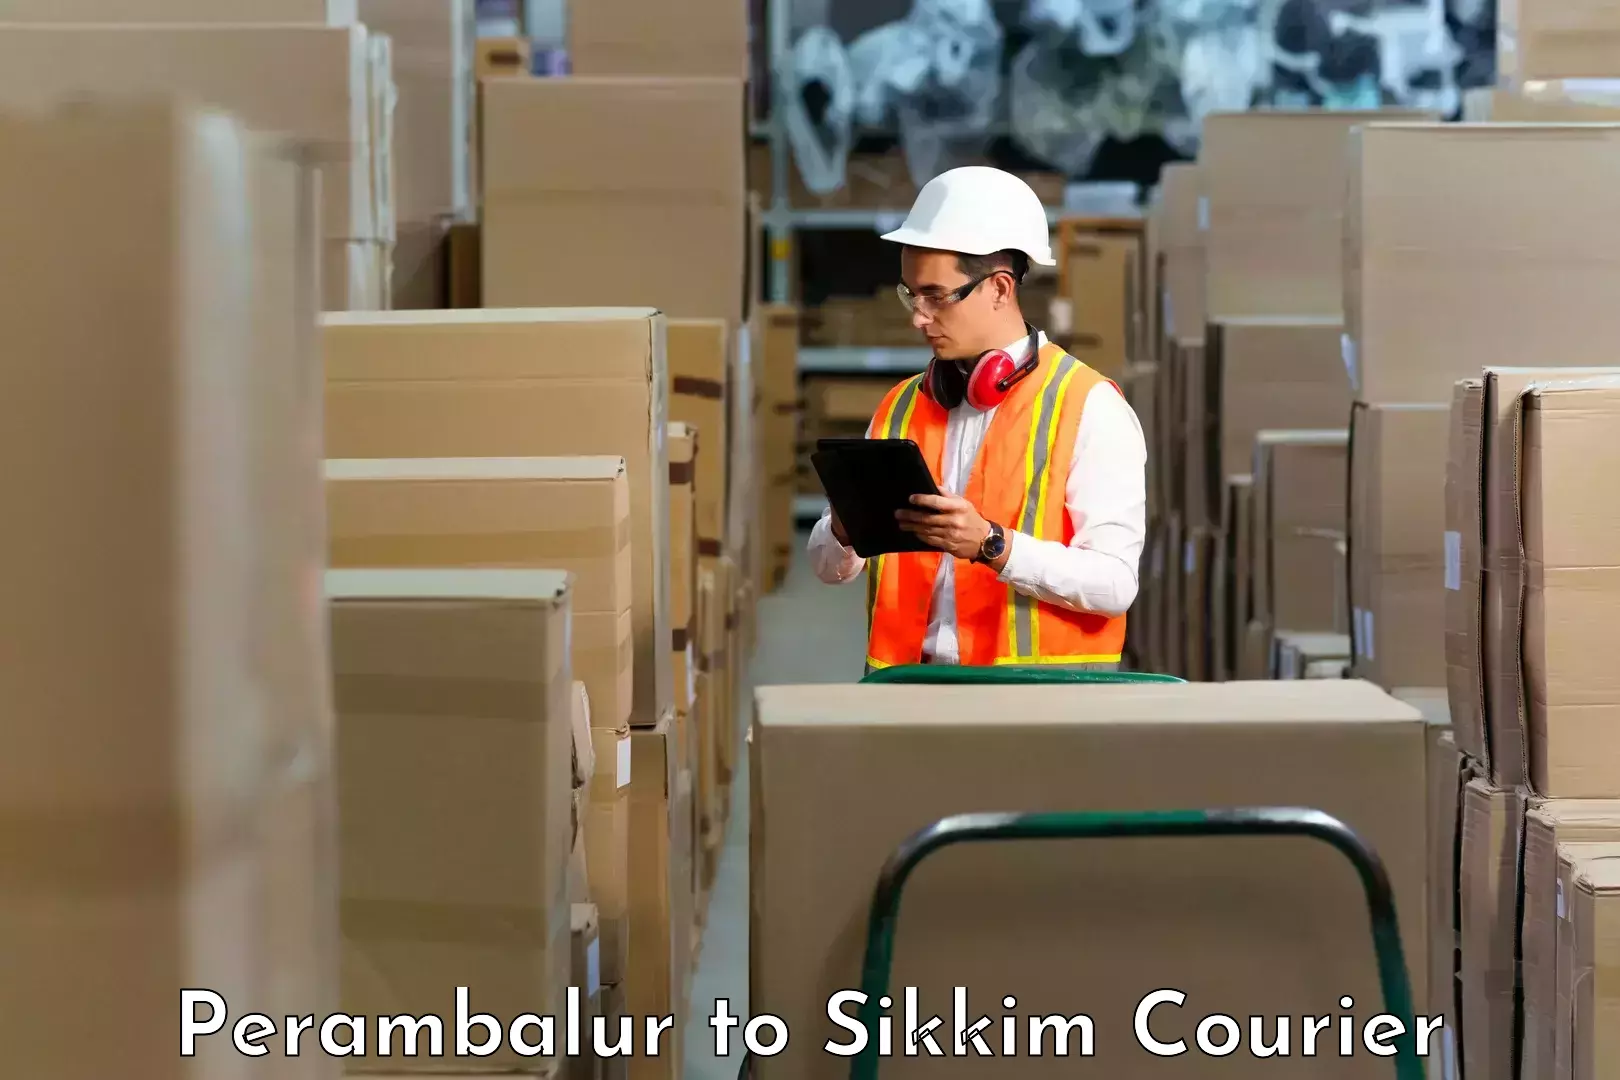 Professional courier handling Perambalur to Sikkim